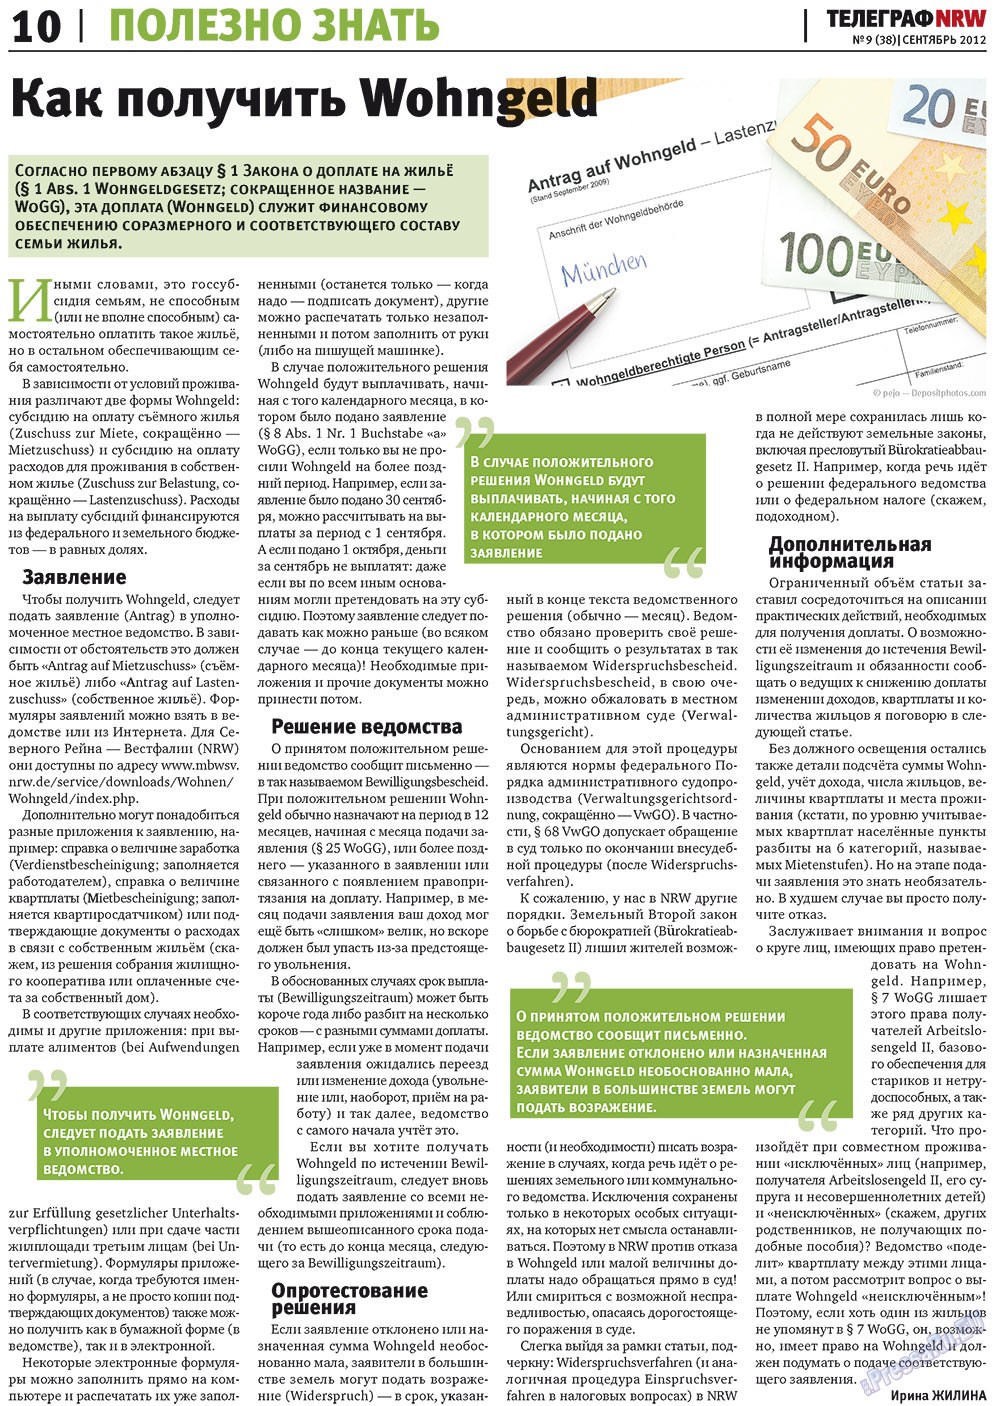 Телеграф NRW, газета. 2012 №9 стр.10